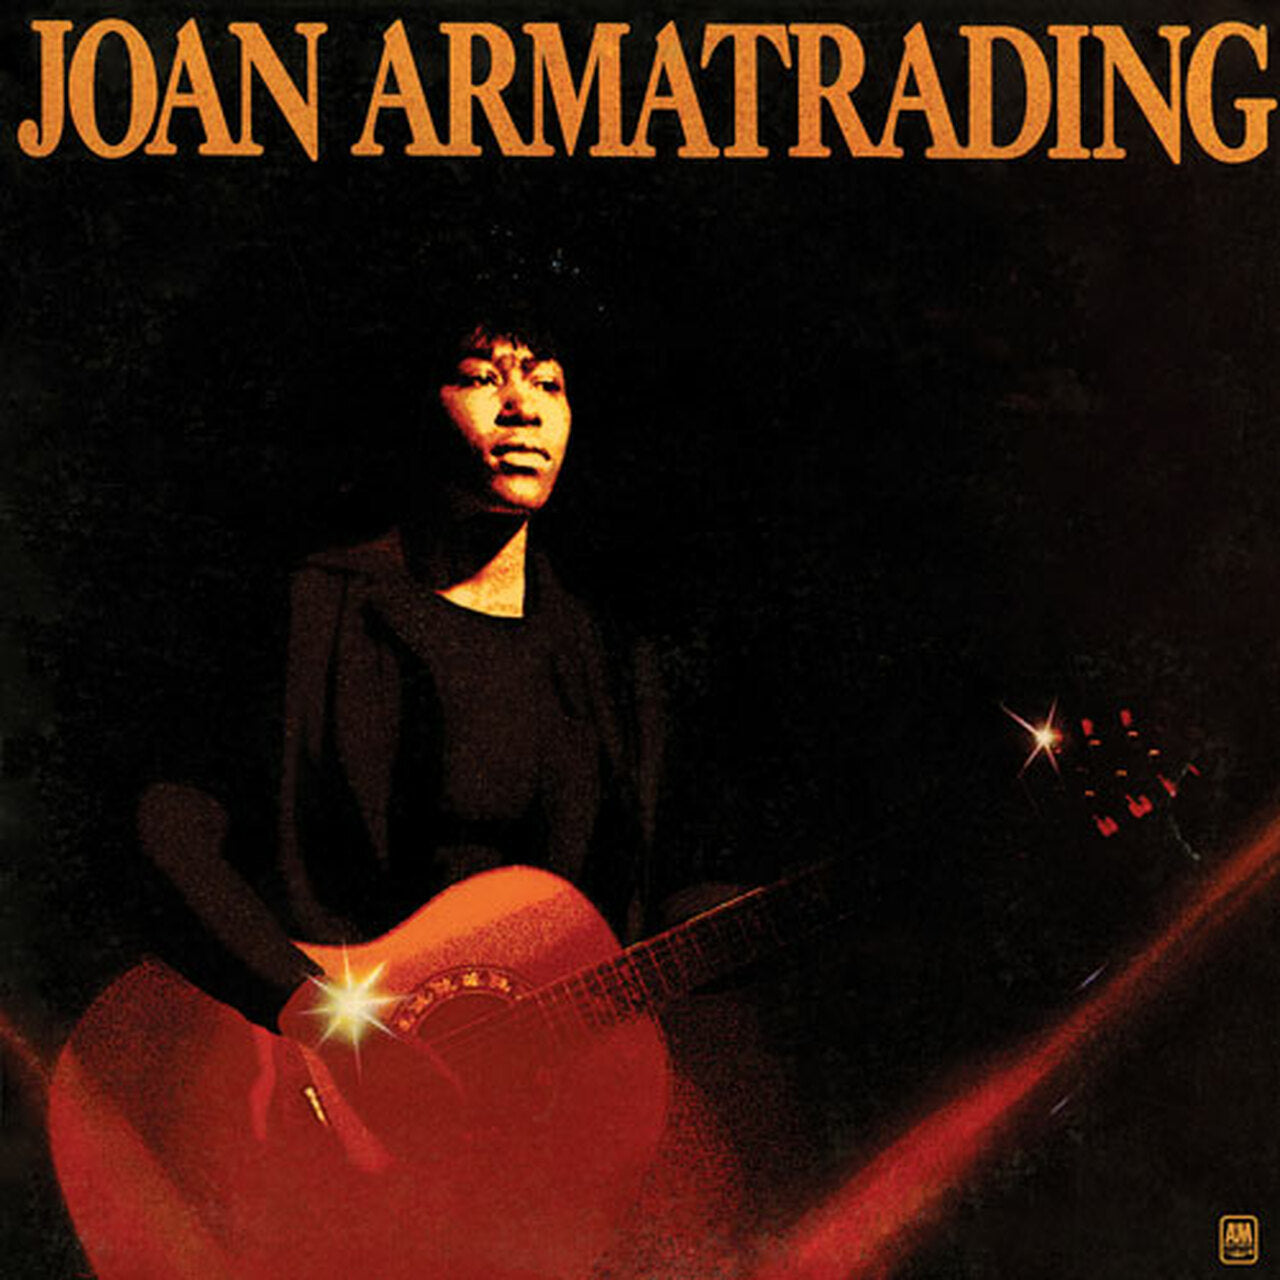 Joan Armatrading - Joan Armatrading - Intervention Records SACD